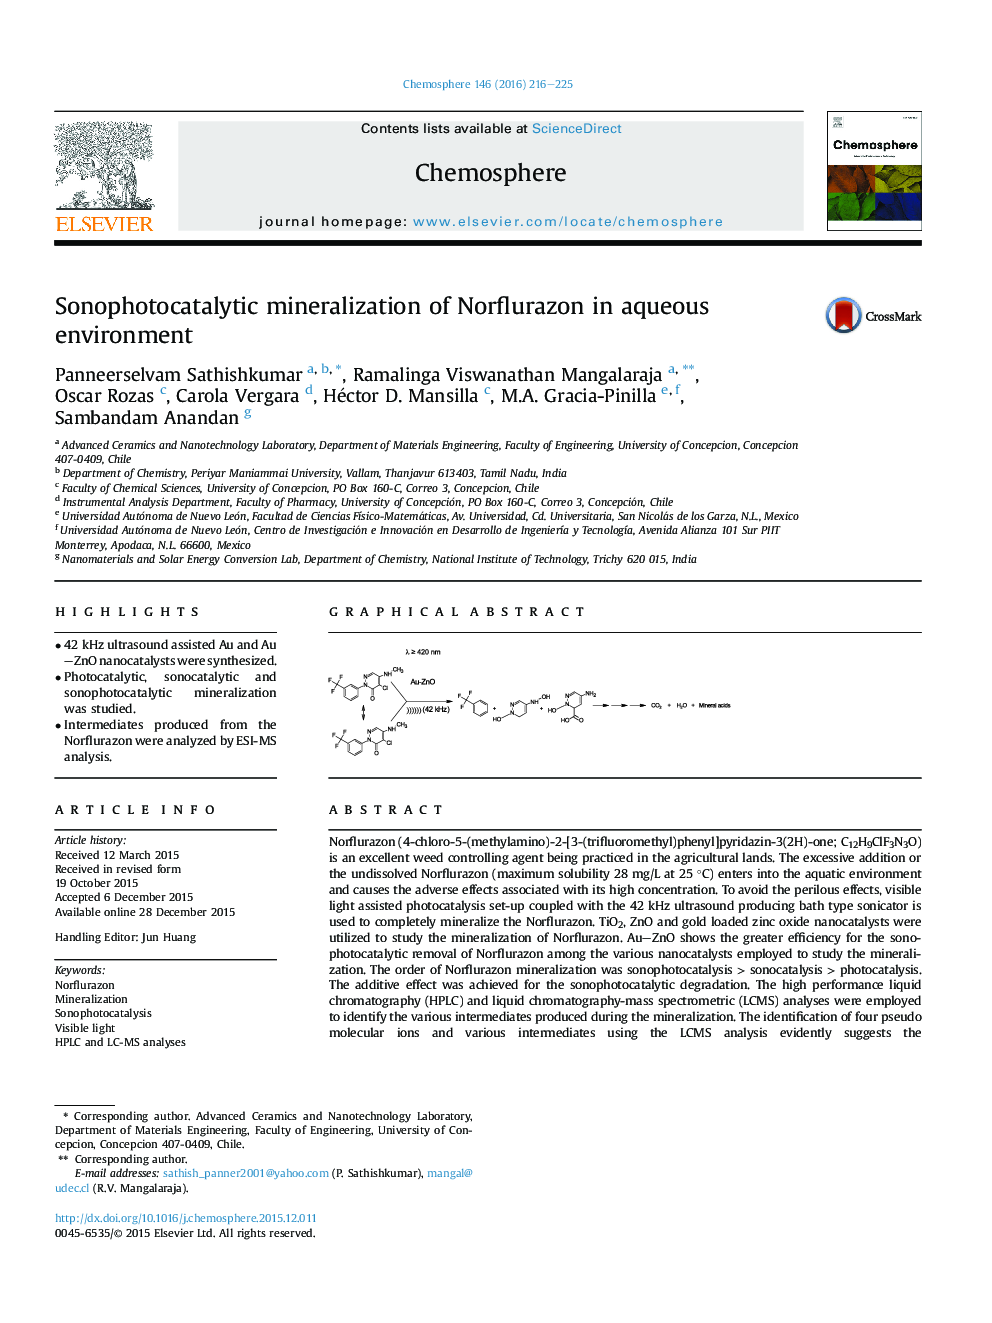 Sonophotocatalytic mineralization of Norflurazon in aqueous environment